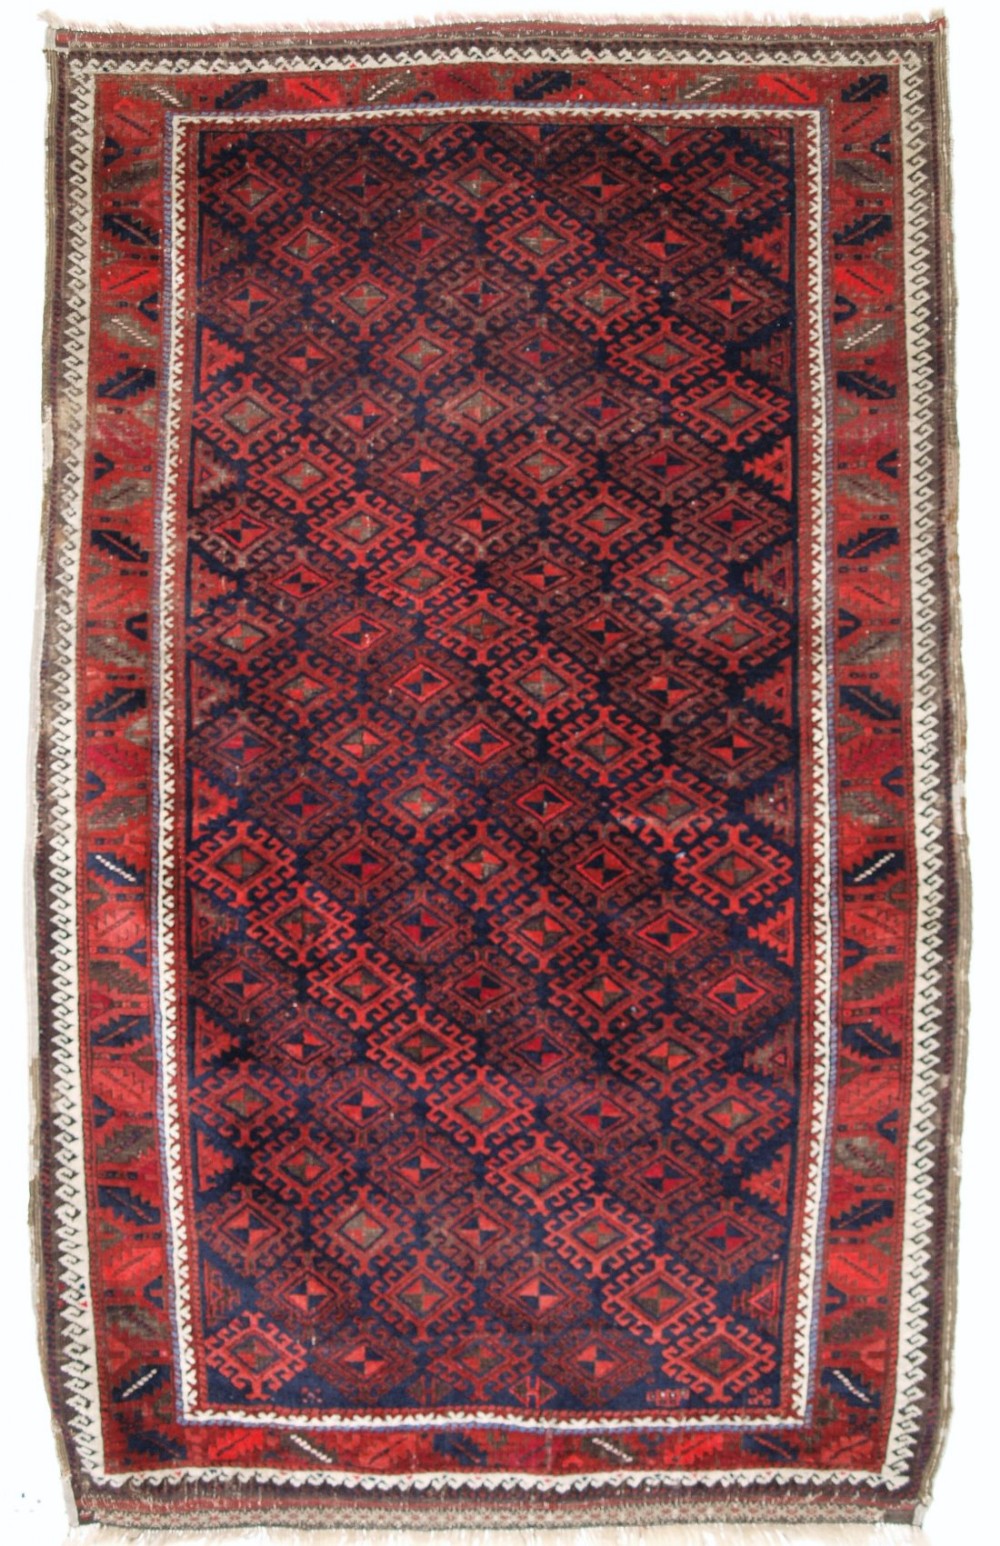 antique baluch rug of larger than normal size latch hook medallion lattice design circa 1880